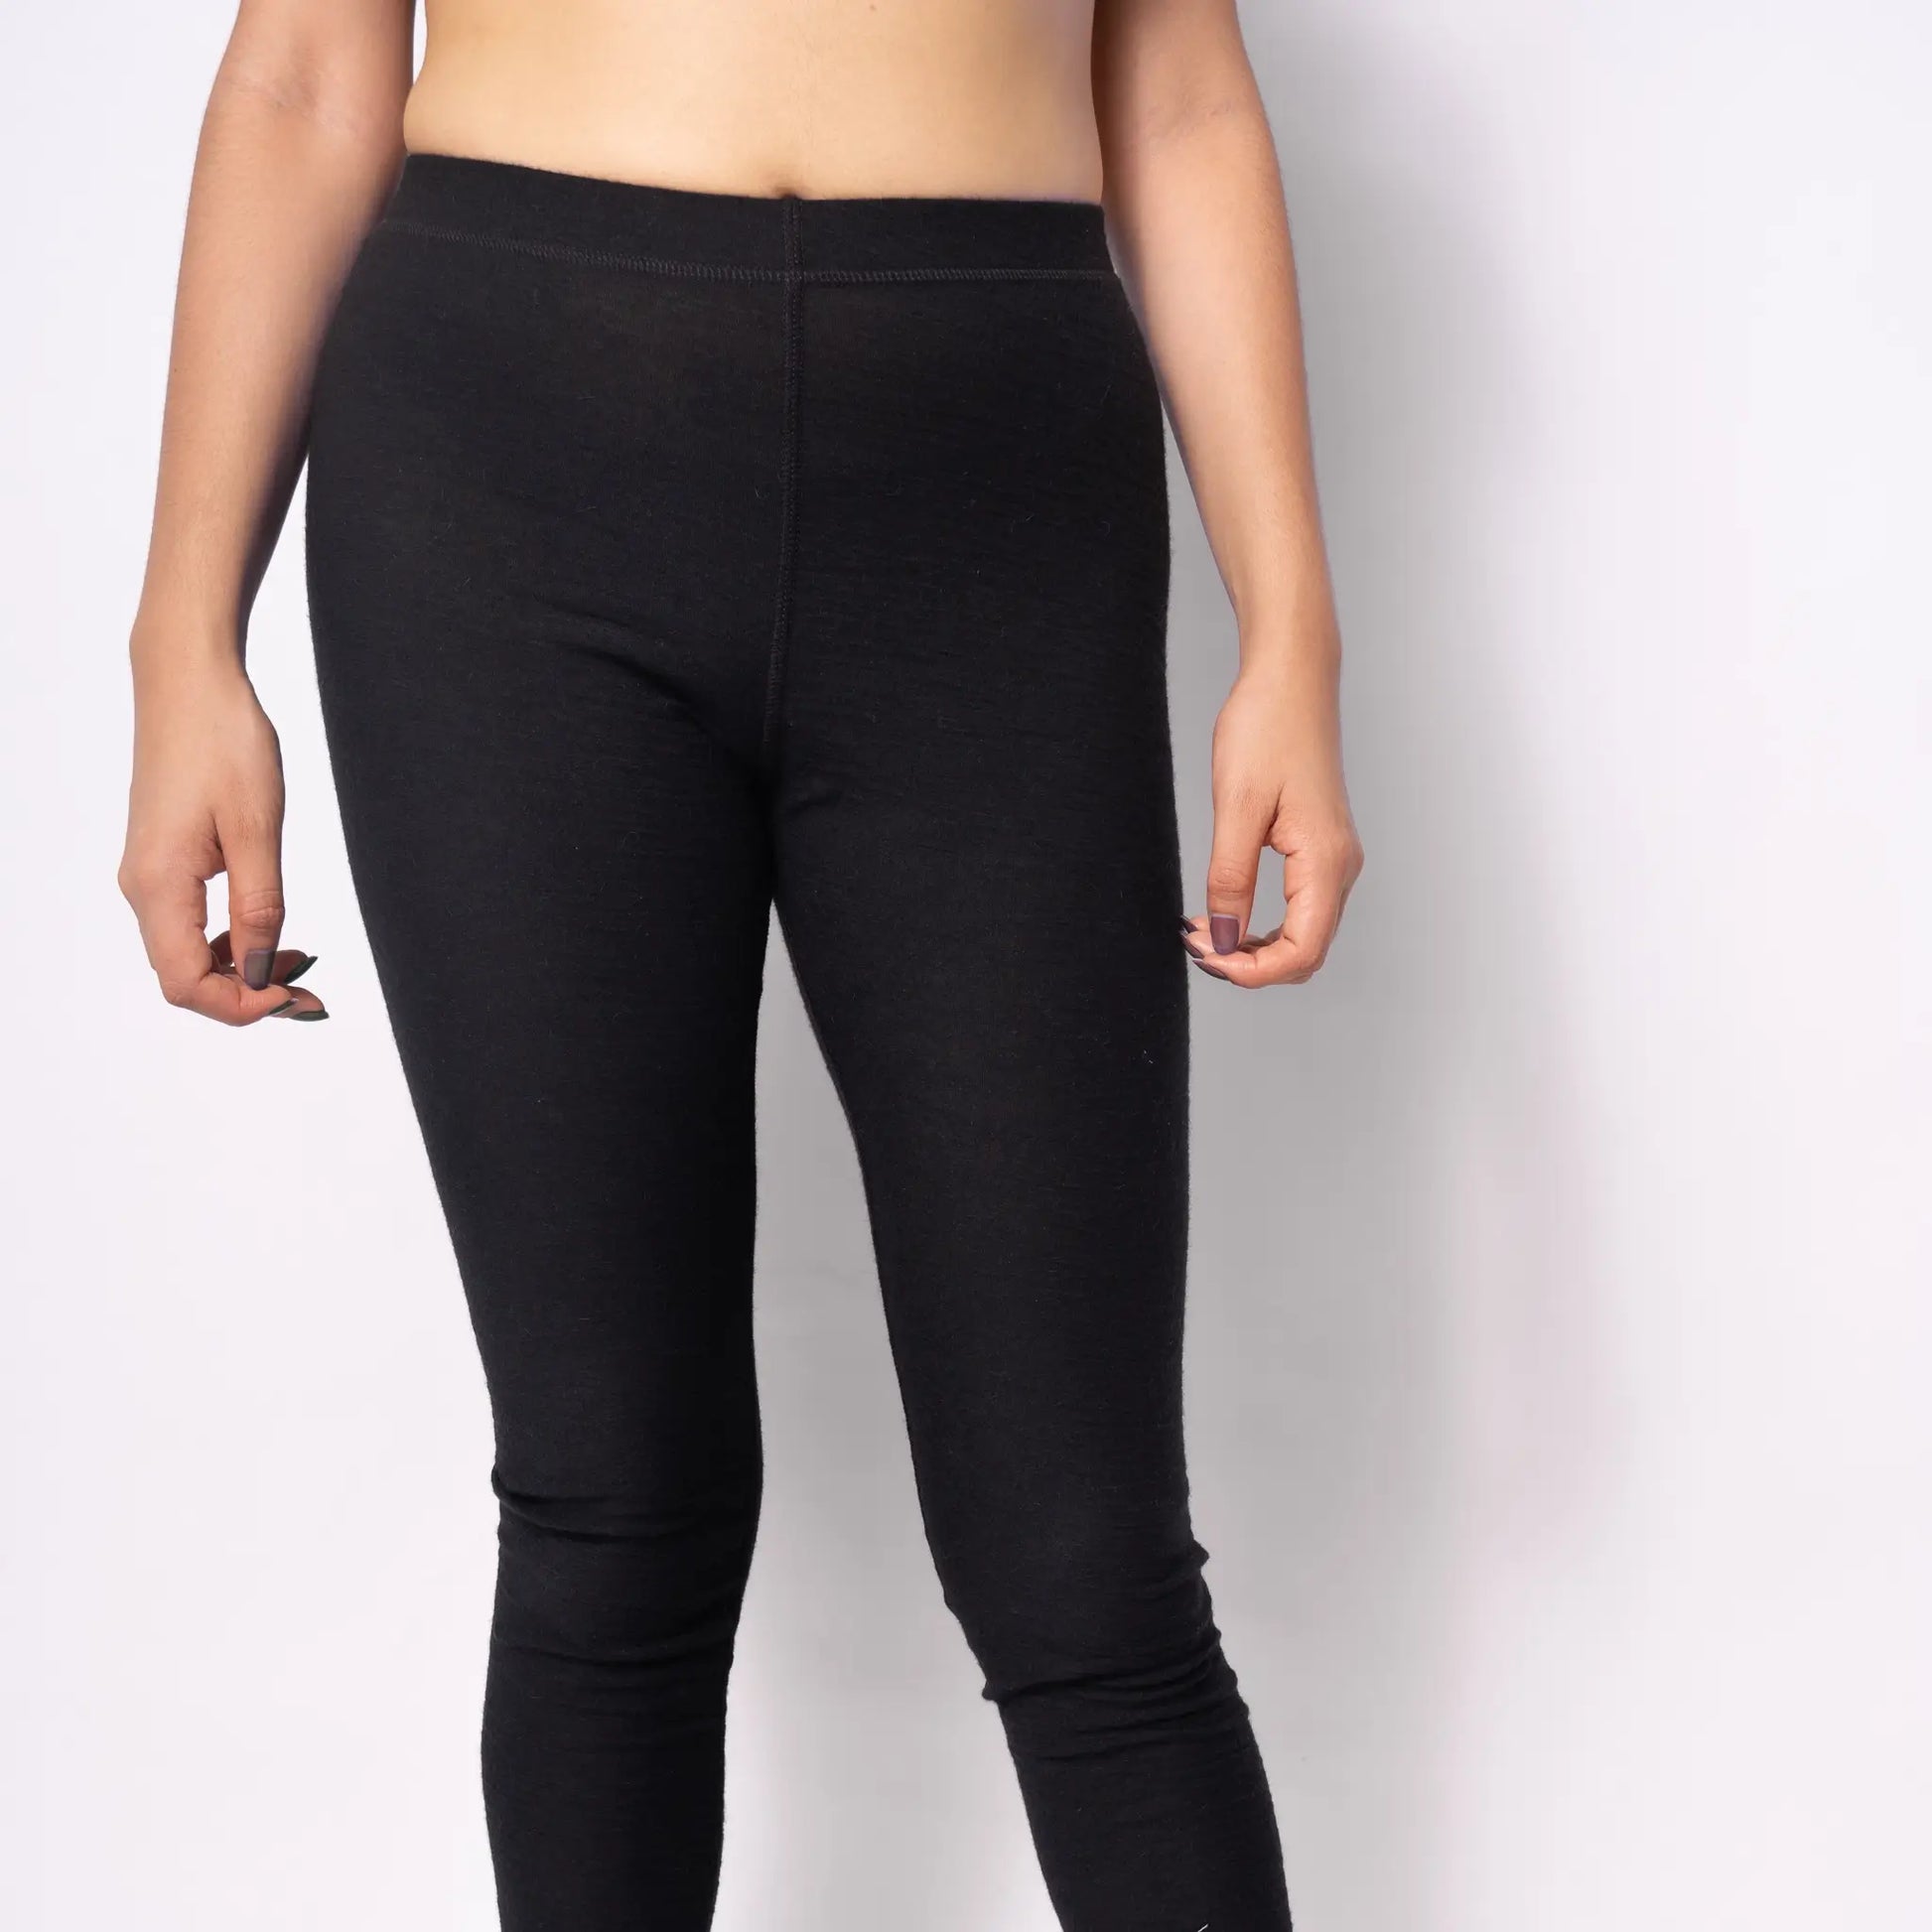 womens leggings ultralight160 all activities color black